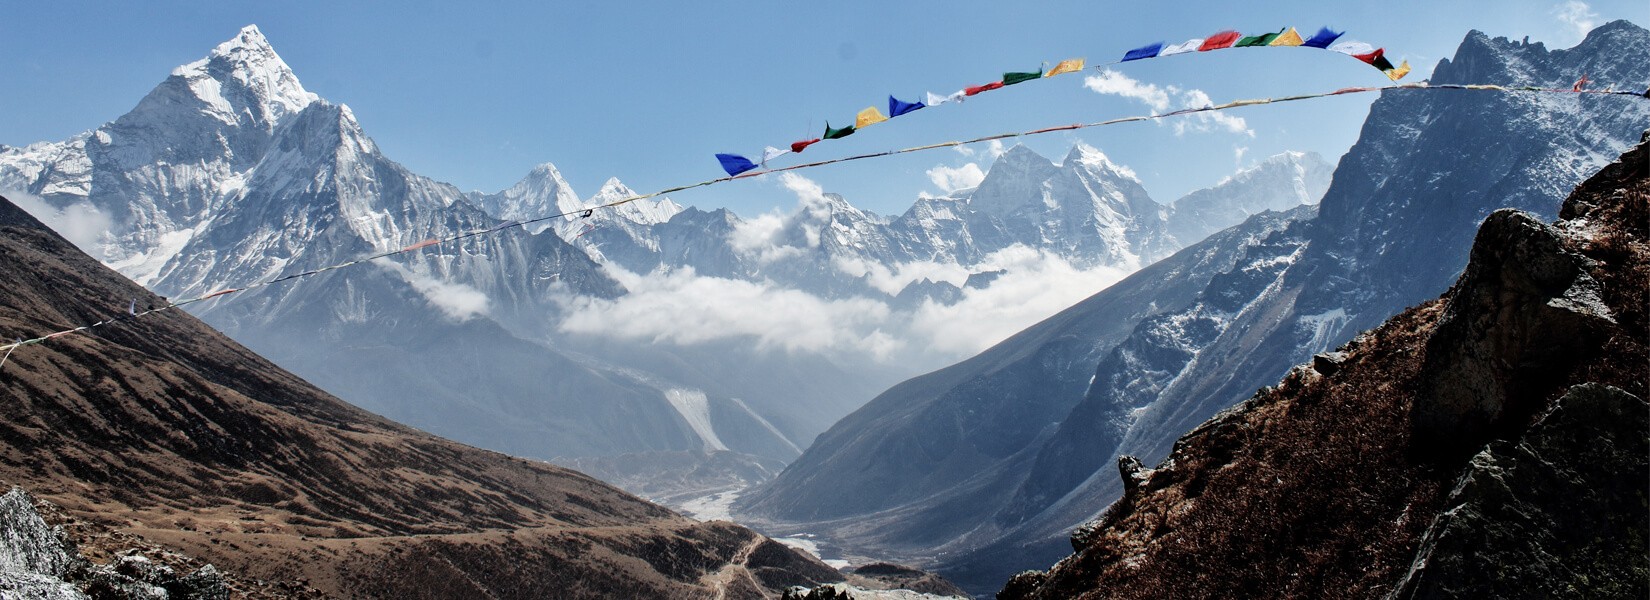 Everest Base Camp Trek- 15 days